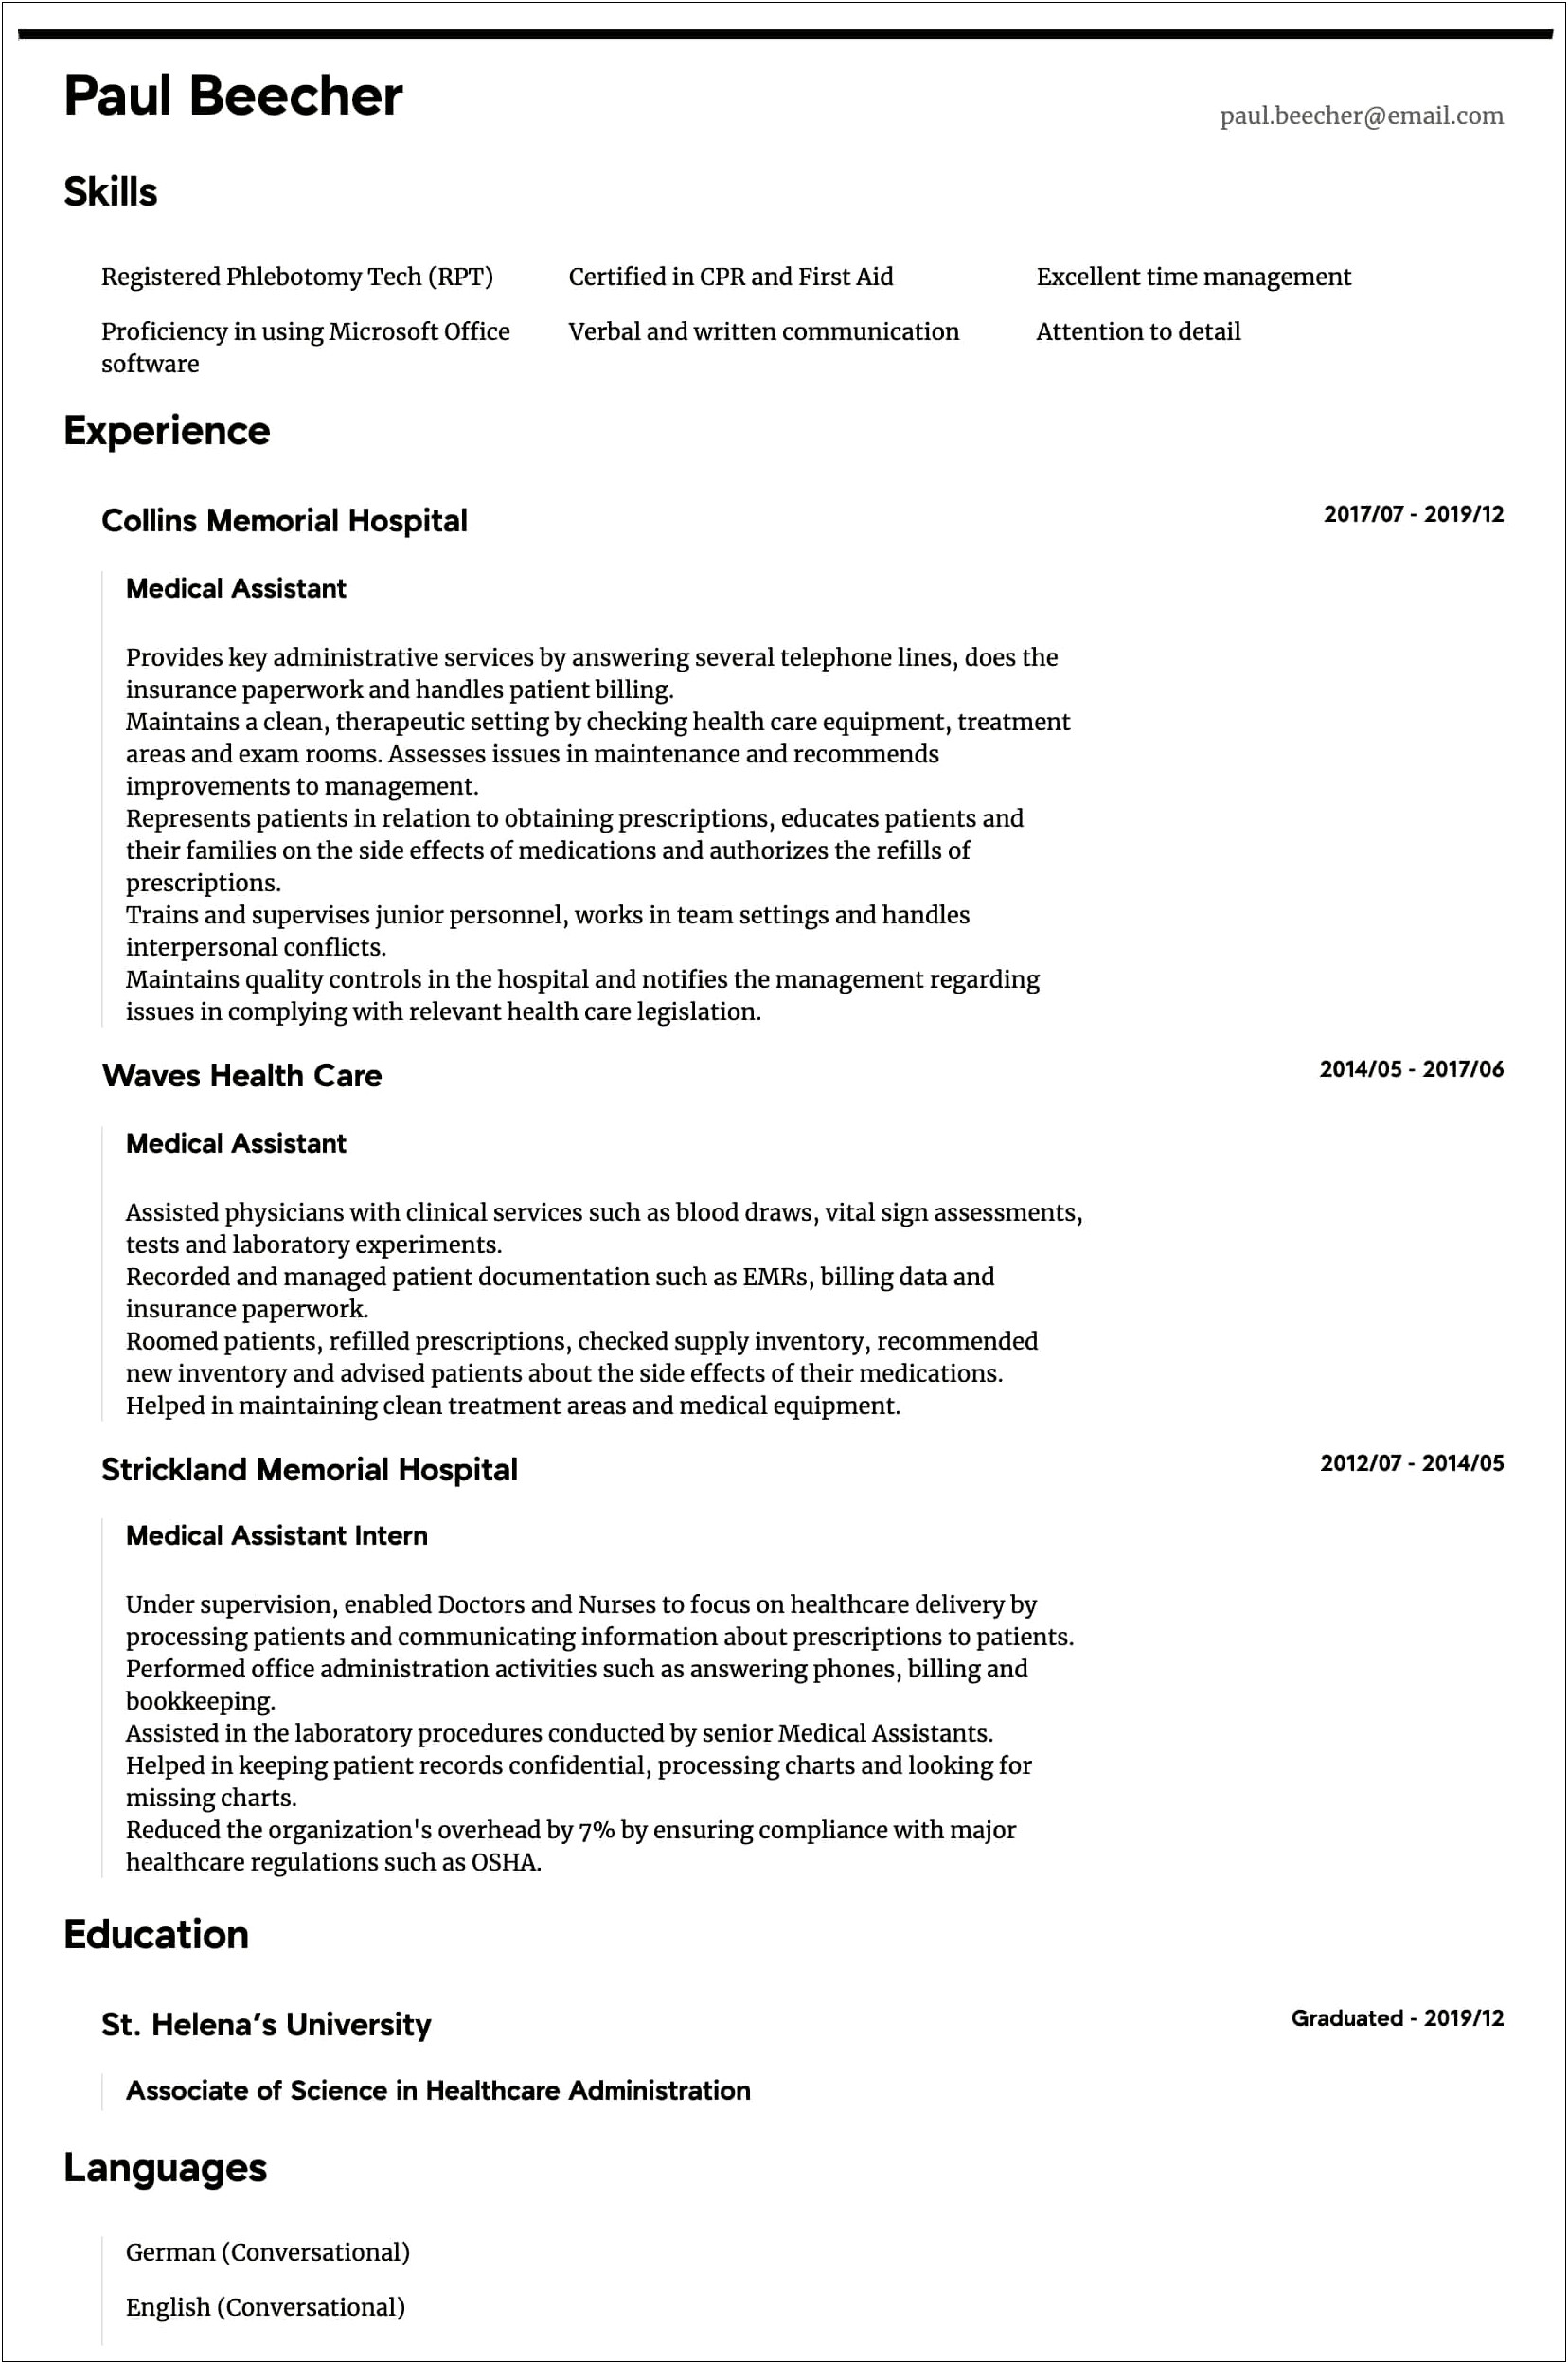 Resume Objectives For Hospital Administration